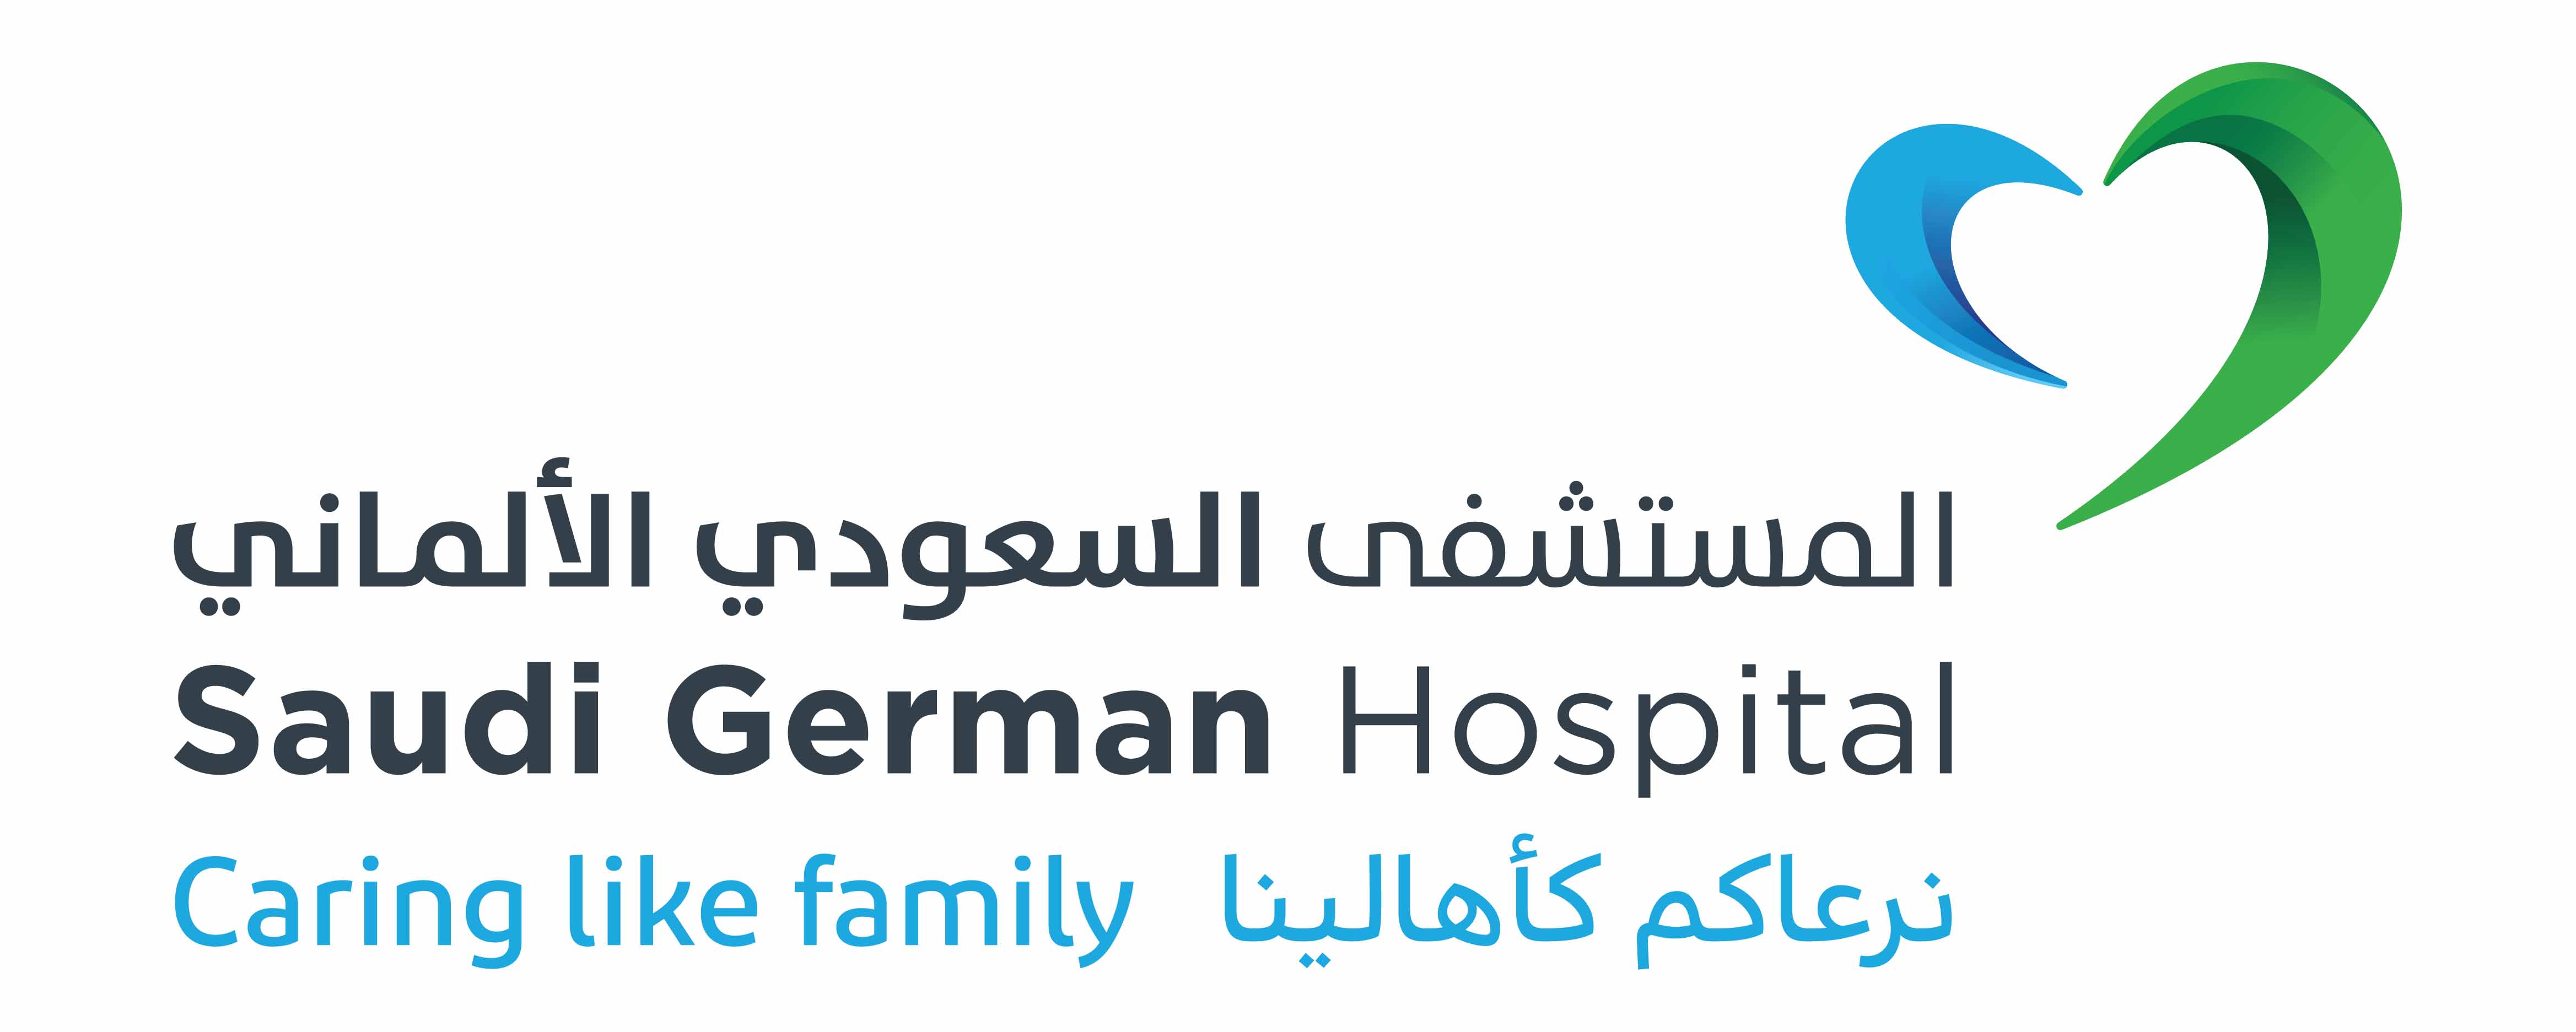 Saudi German Hospital, Cairo